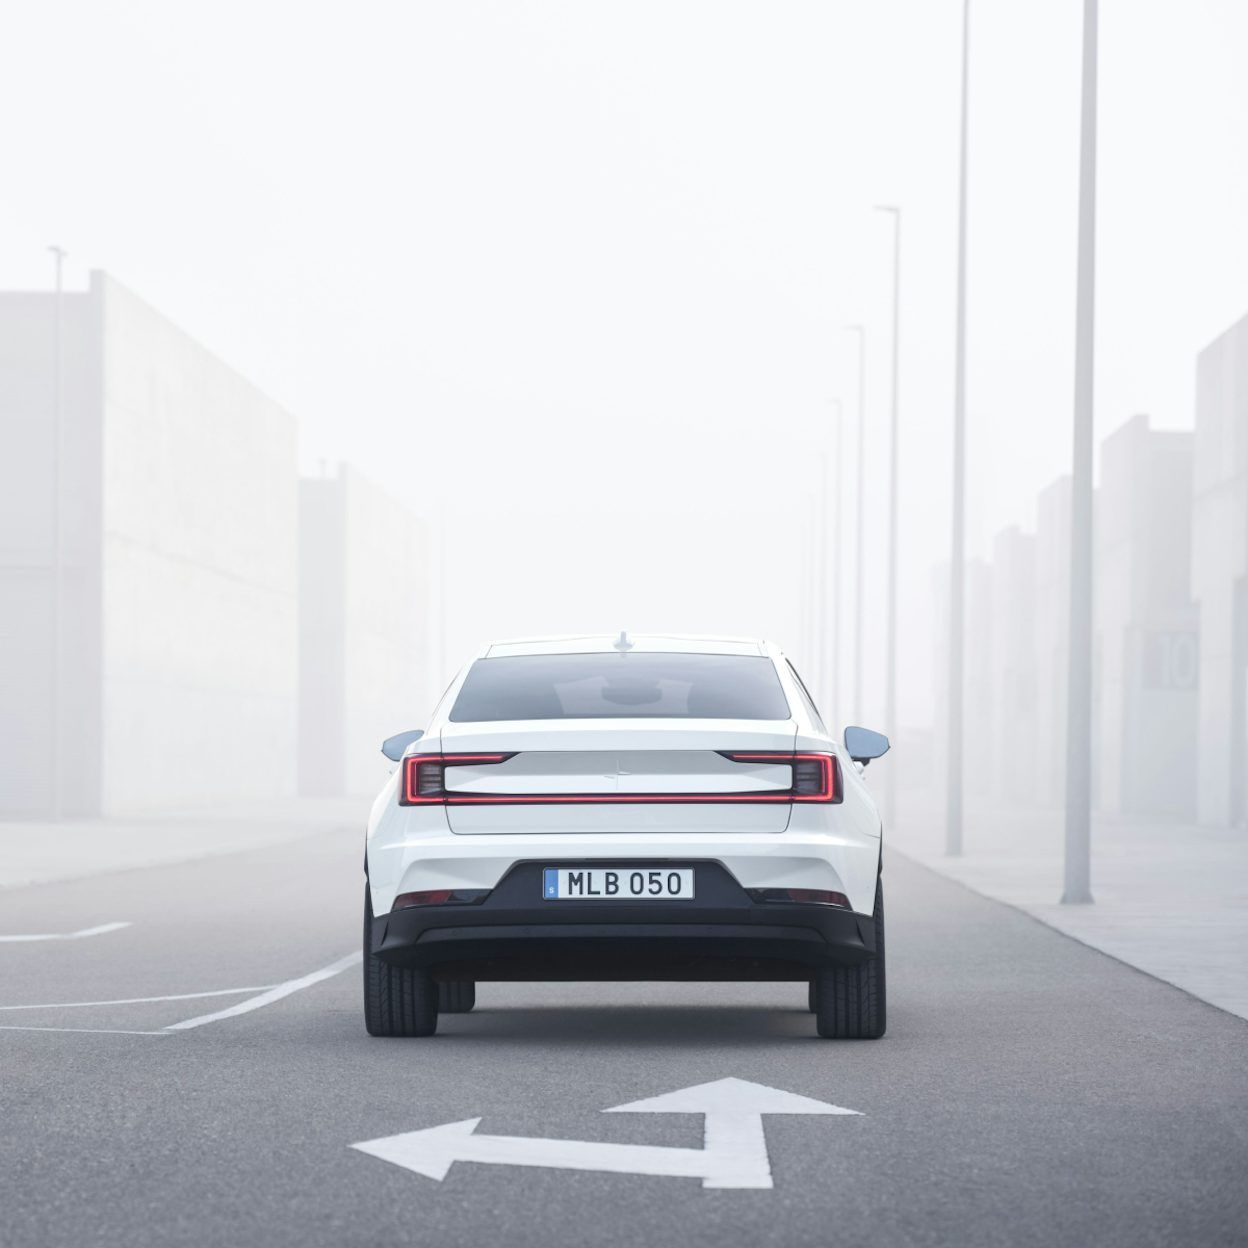 Polestar 2 drives forward on a road in a foggy environment